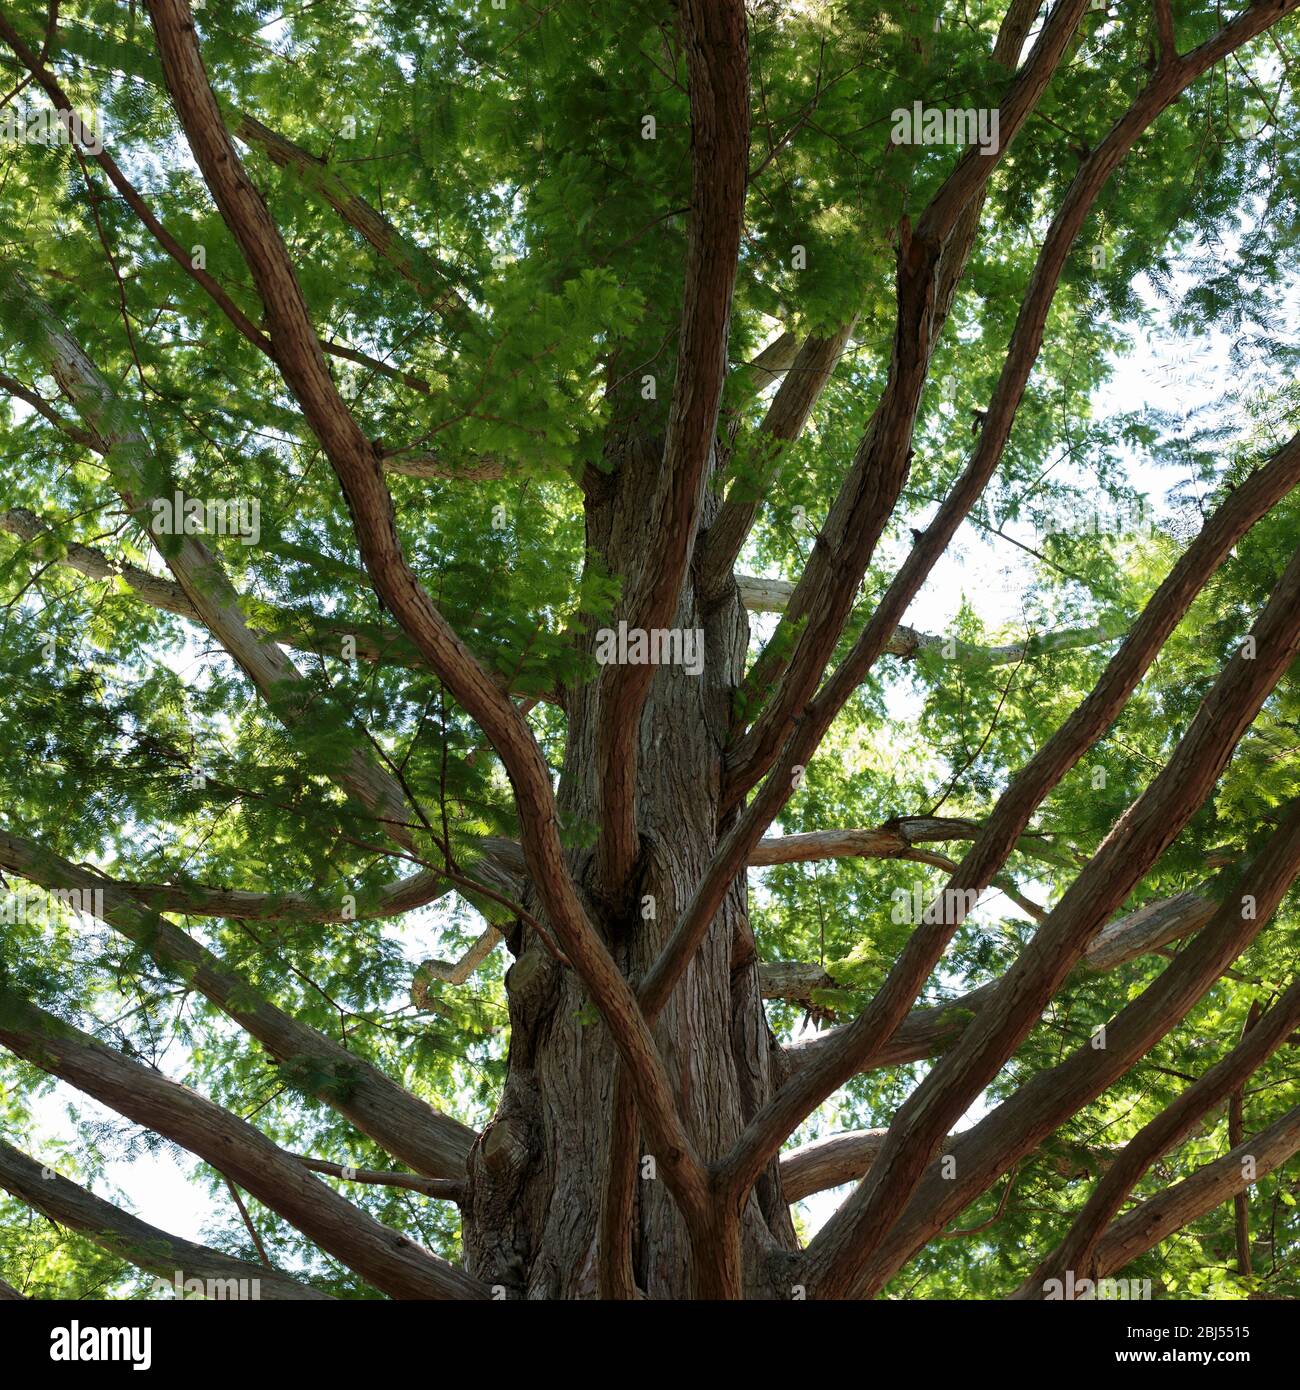 A Metasequoia, or Dawn Redwood, in Edwards Gardens, North York, Toronto, Ontario, Canada Stock Photo